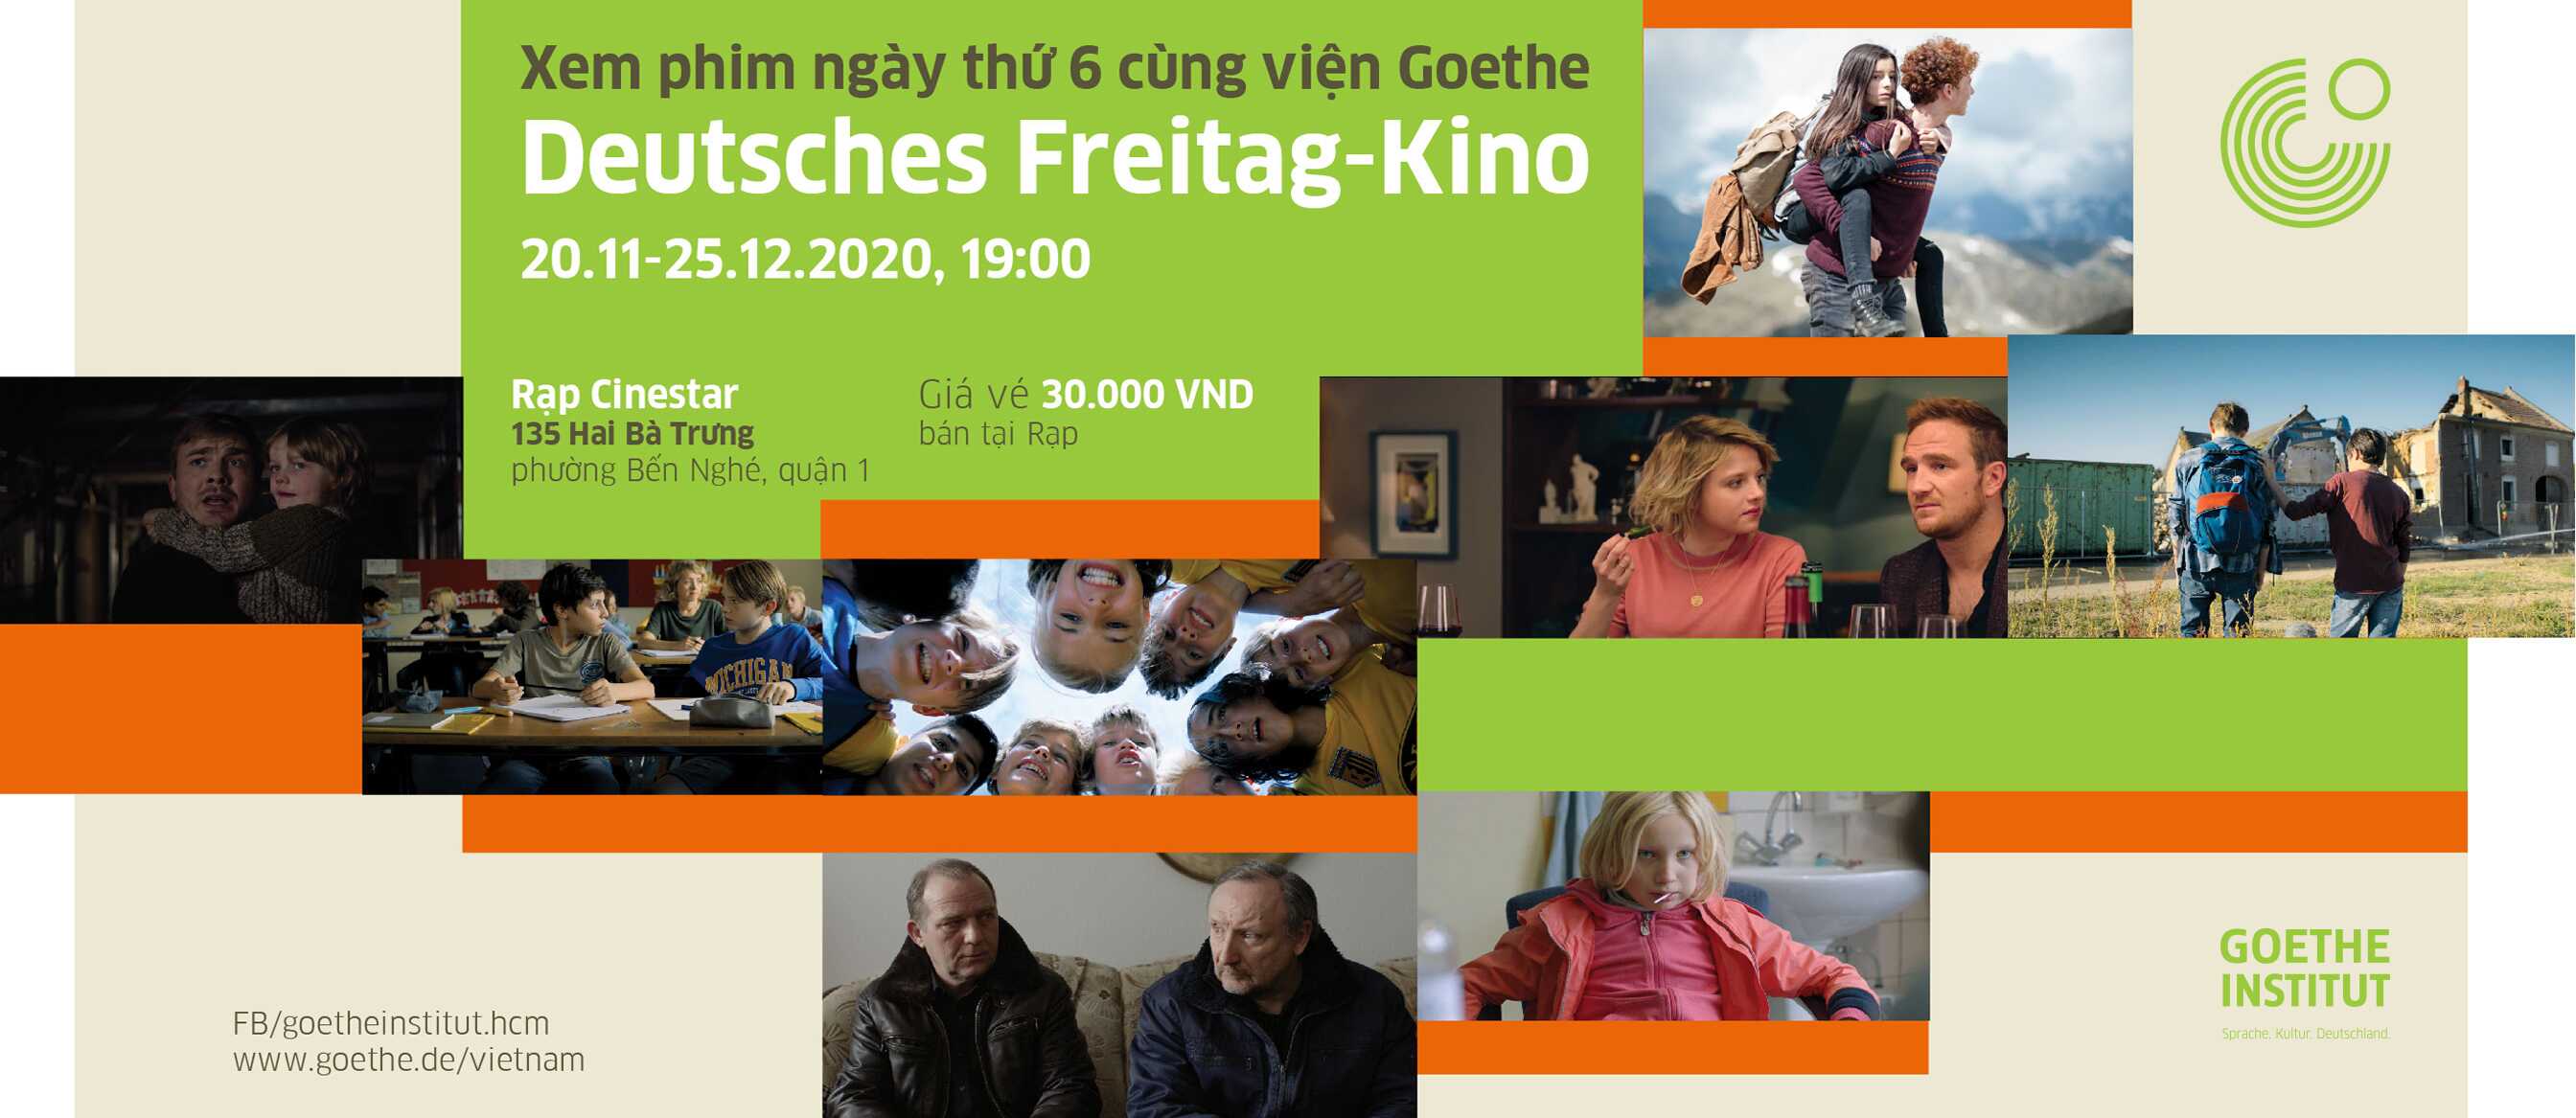 Freitag Kino In Ho Chi Minh Stadt 20 11 25 12 2020 Goethe Institut Vietnam